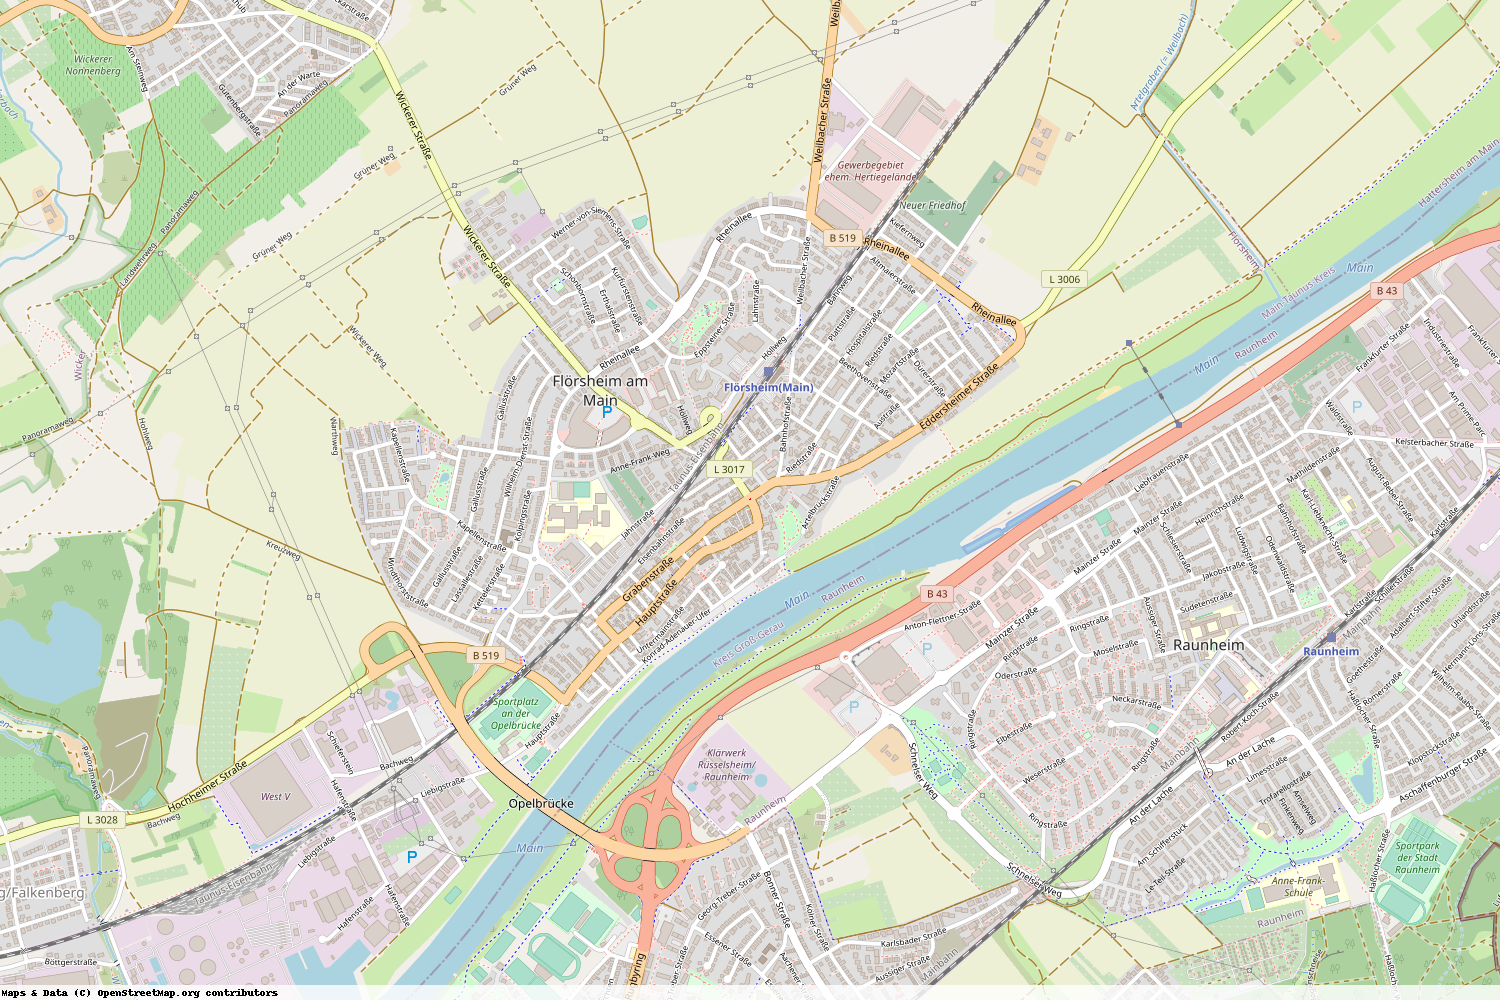 Ist gerade Stromausfall in Hessen - Main-Taunus-Kreis - Flörsheim am Main?